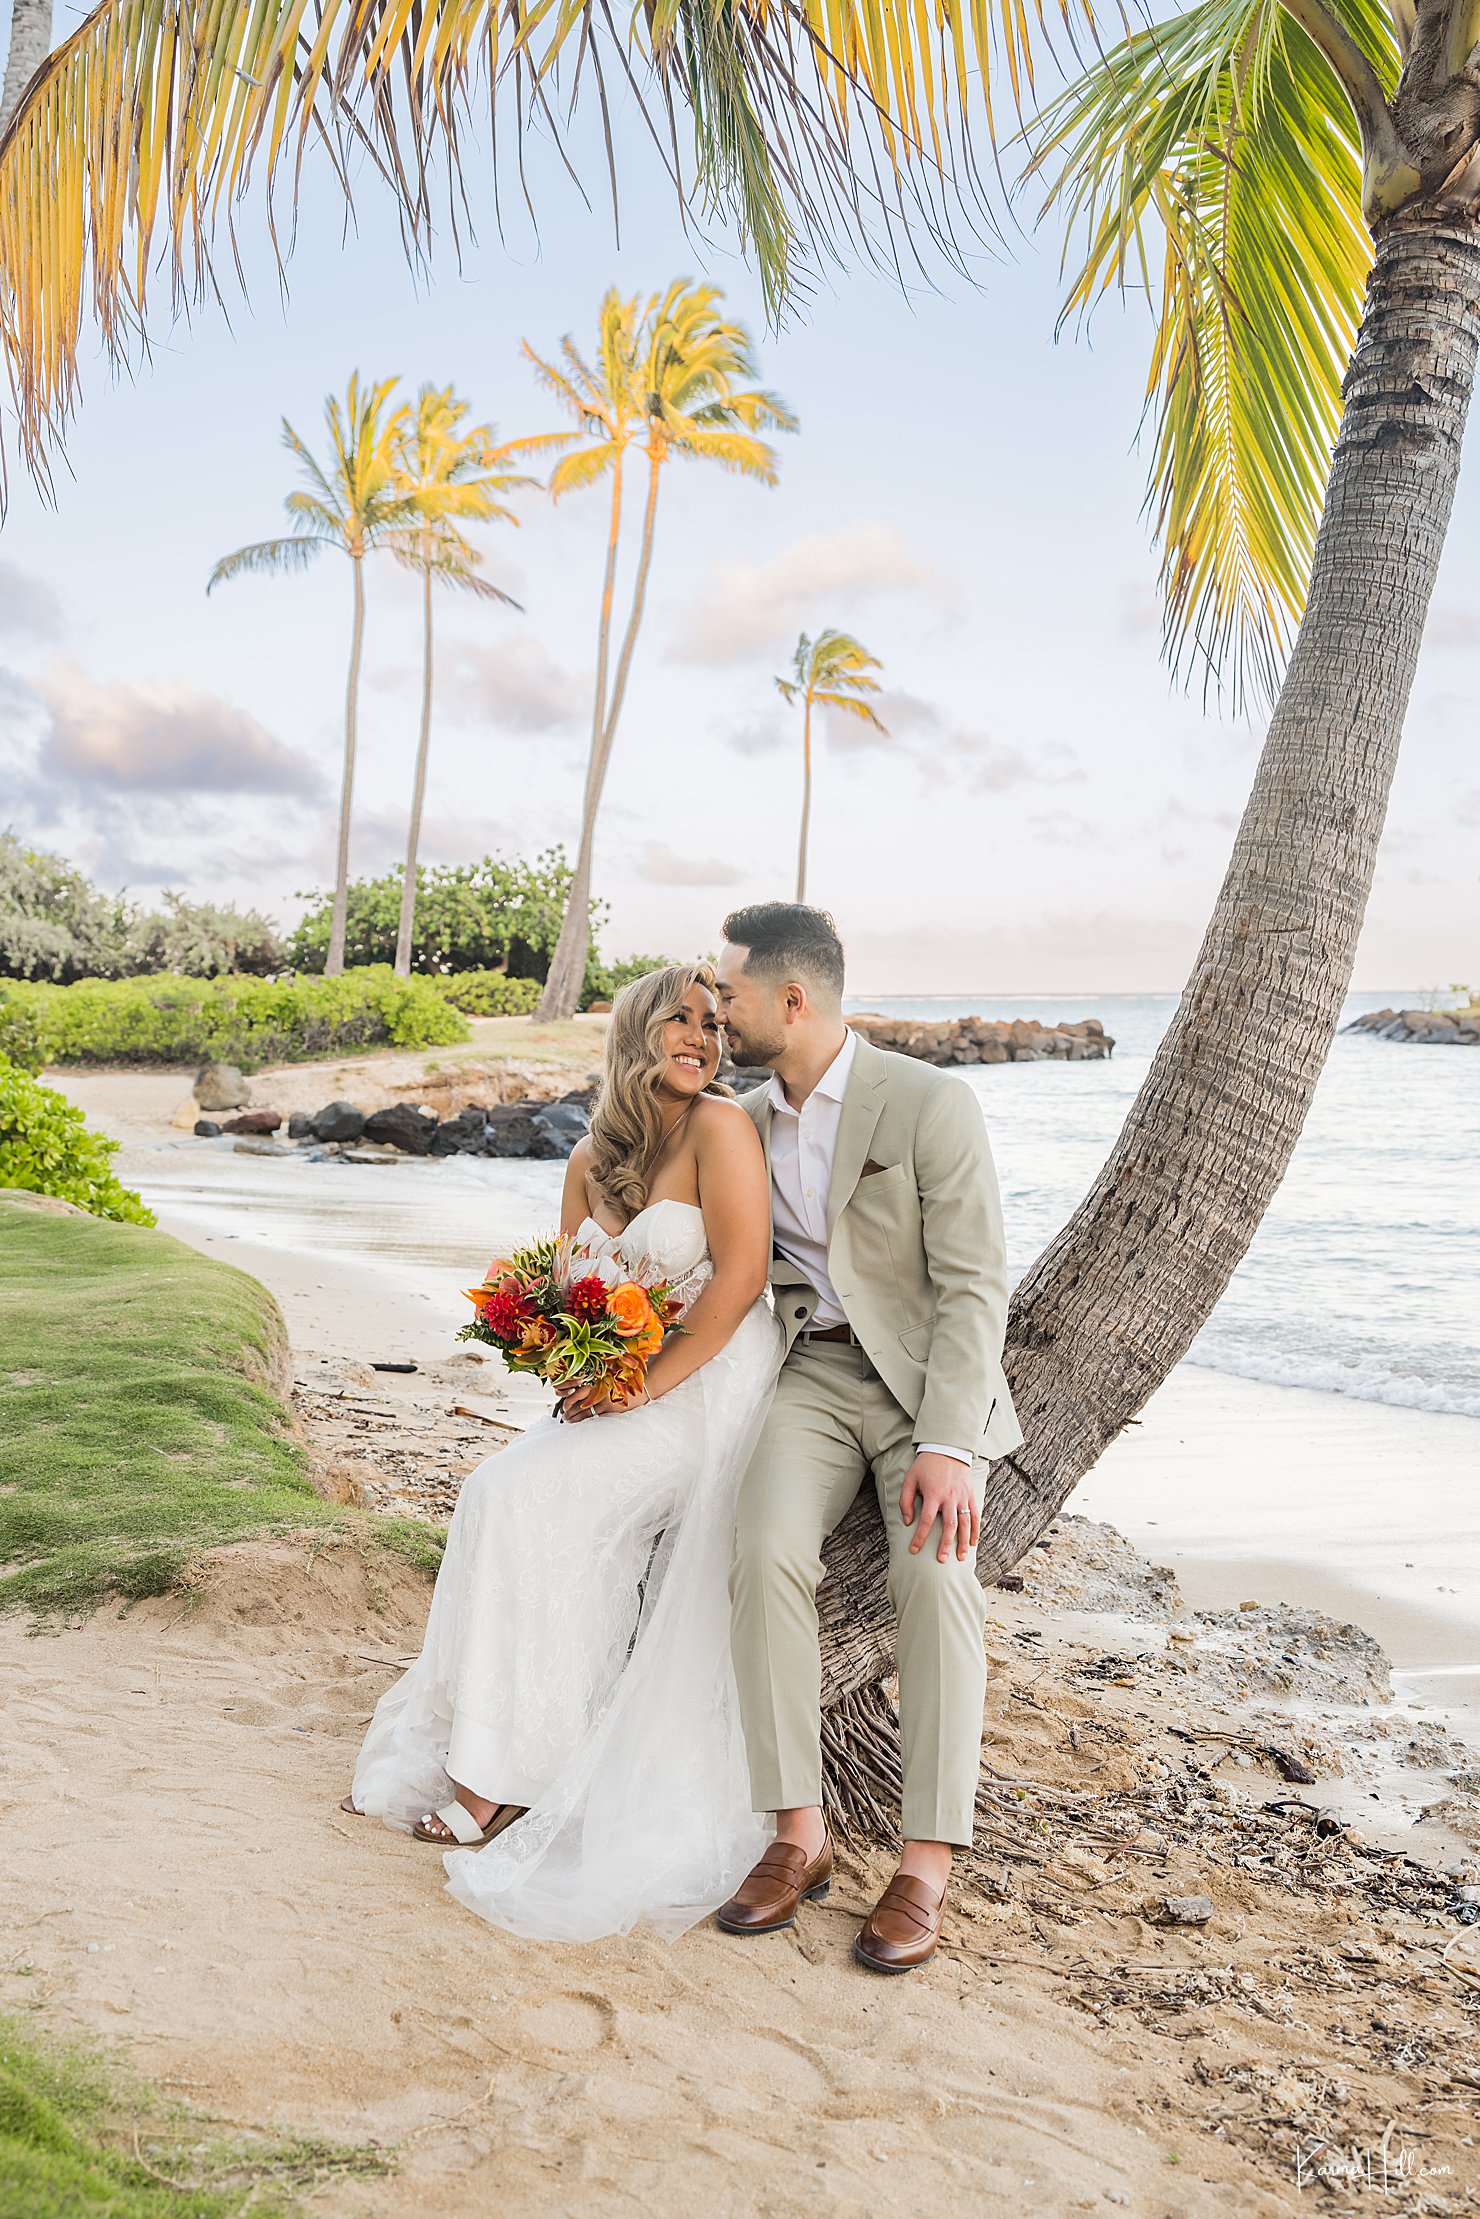 Beautiful elopement in Oahu